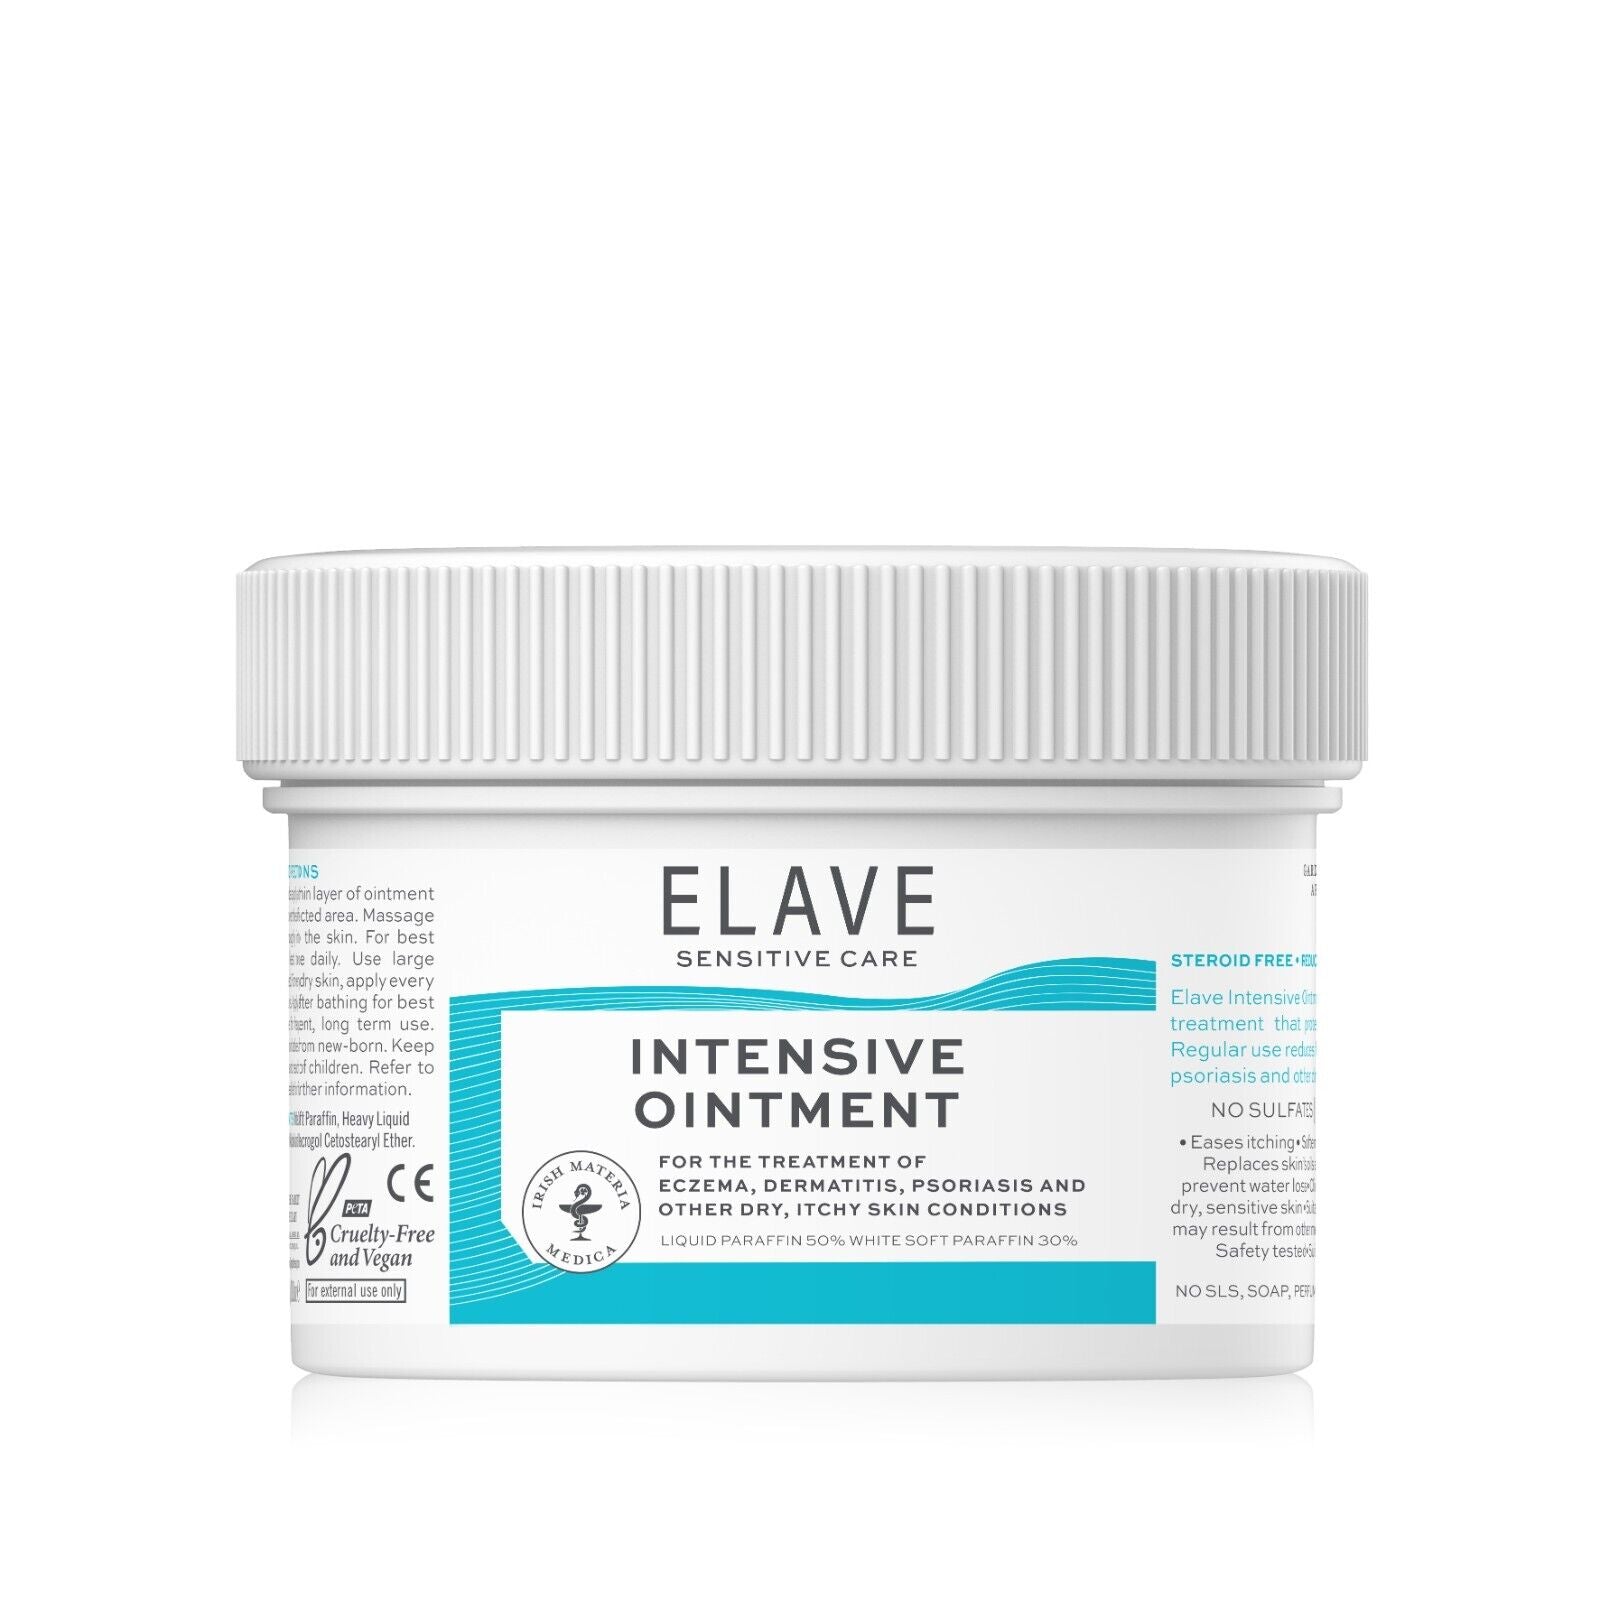 Elave Sensitive Intensive Ointment 250g Image